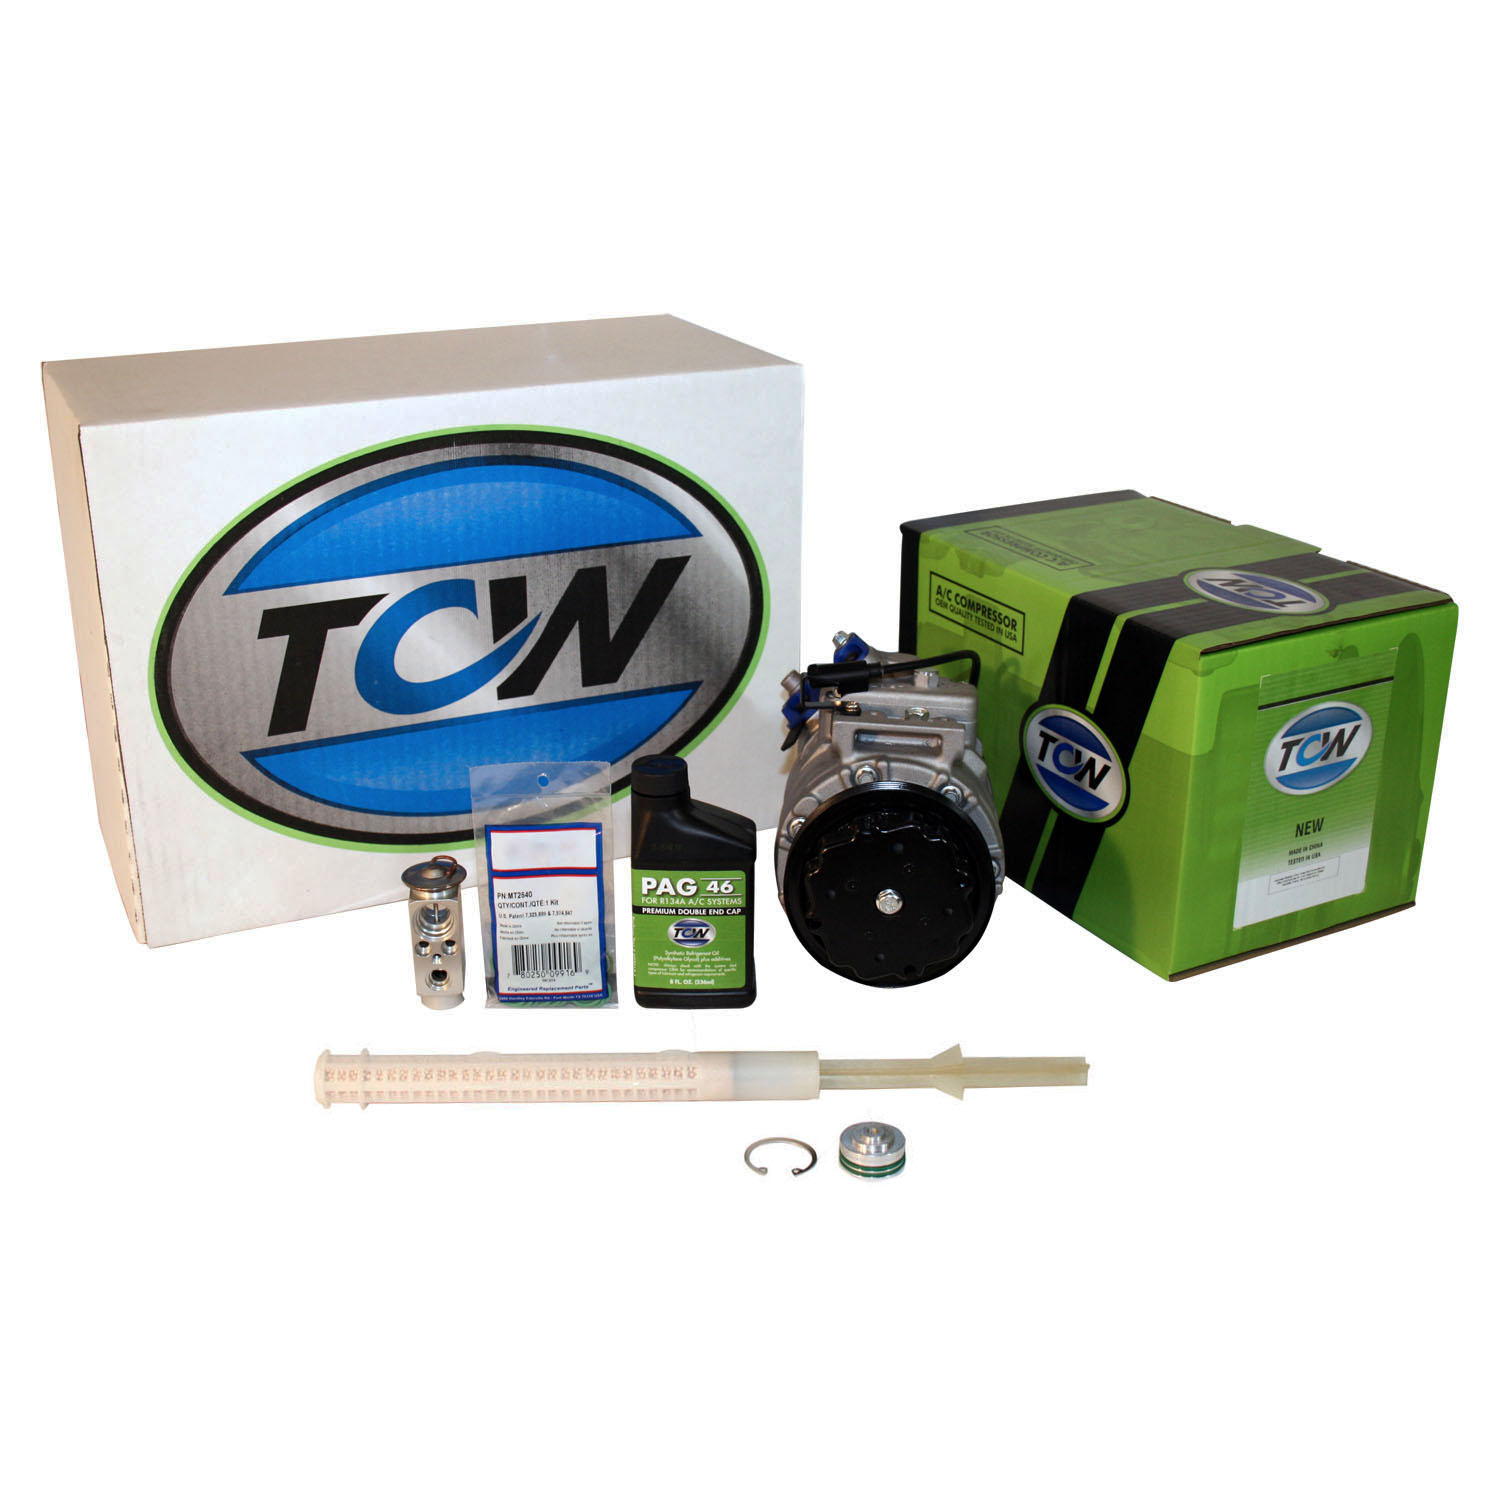 TCW Vehicle A/C Kit K1000429N New Product Image field_60b6a13a6e67c